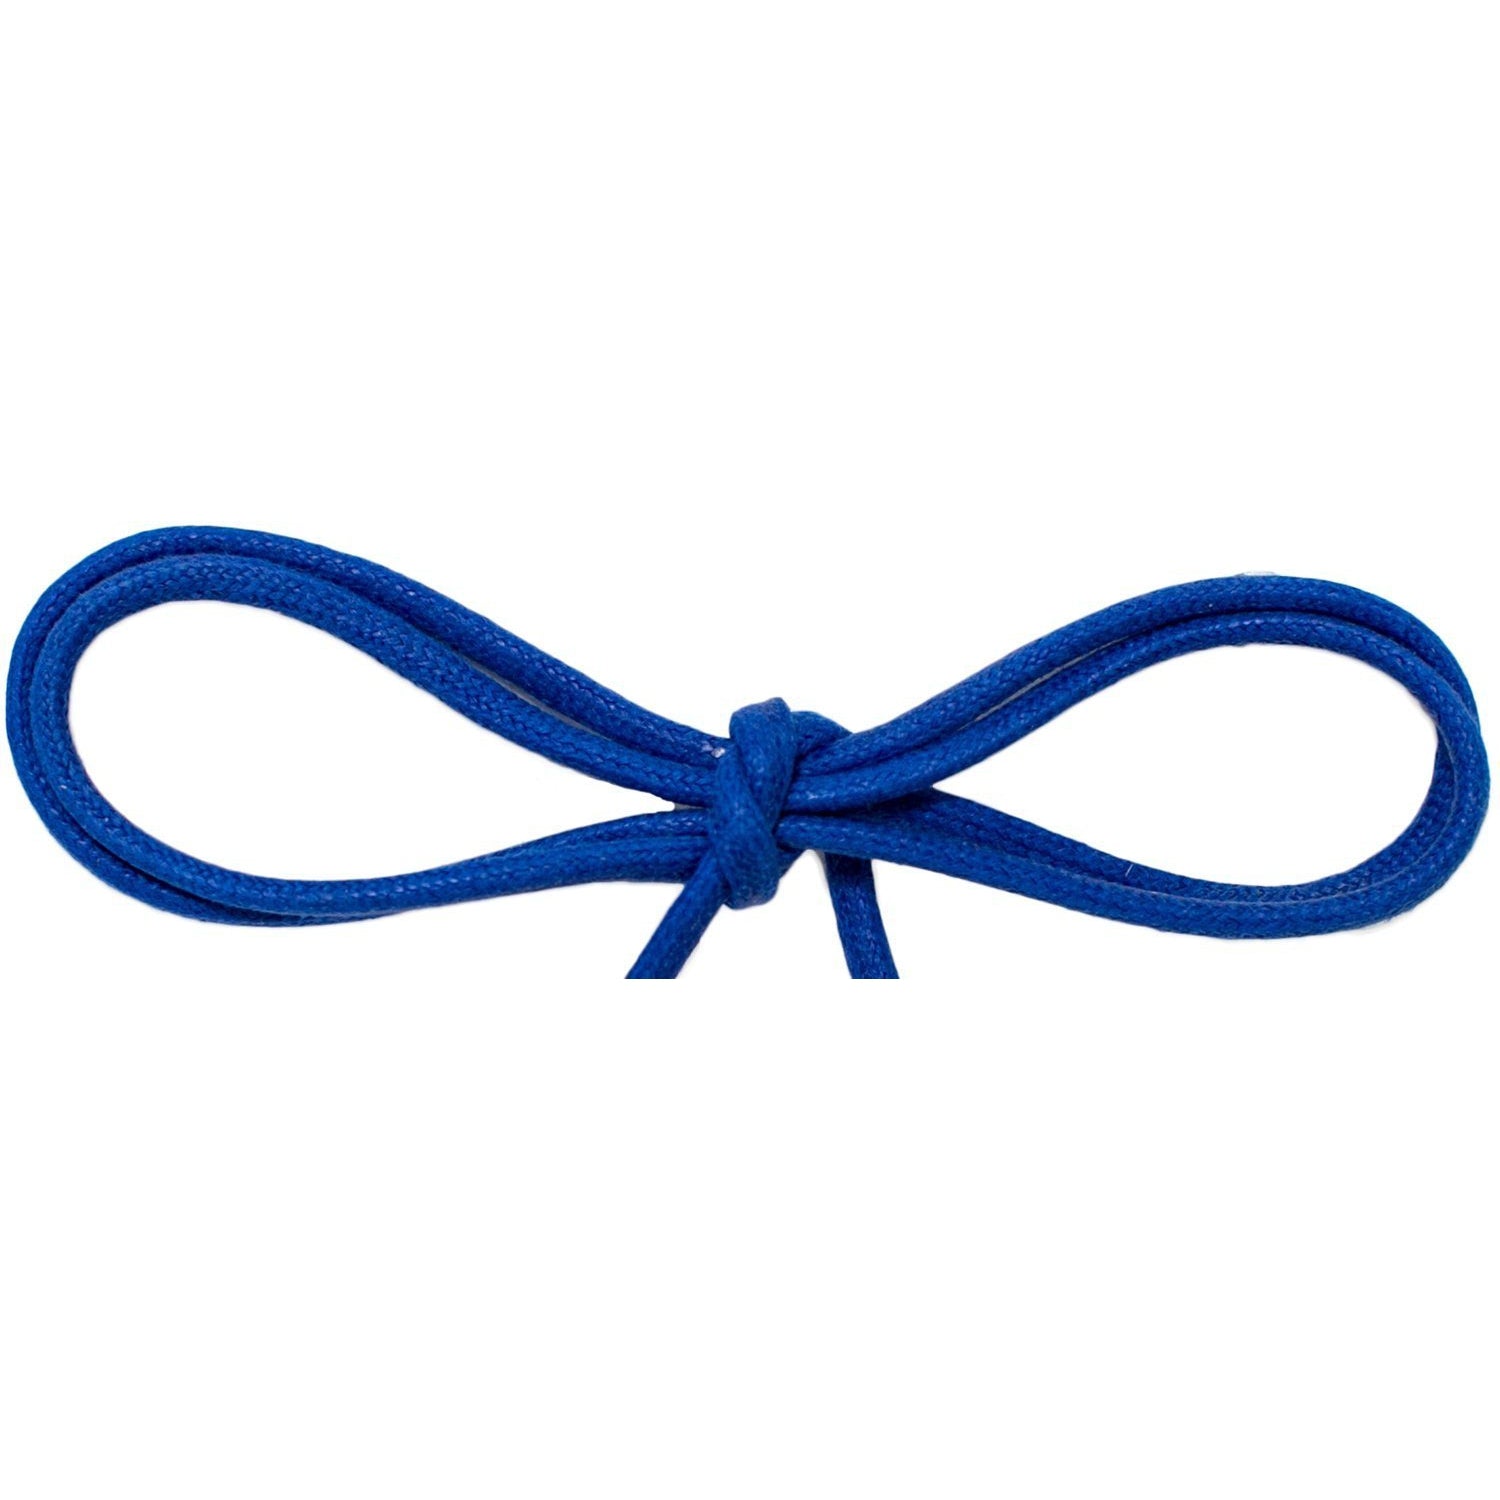 Wholesale Waxed Cotton Thin Round DRESS Laces 1/8'' - Royal Blue (12 Pair Pack) Shoelaces